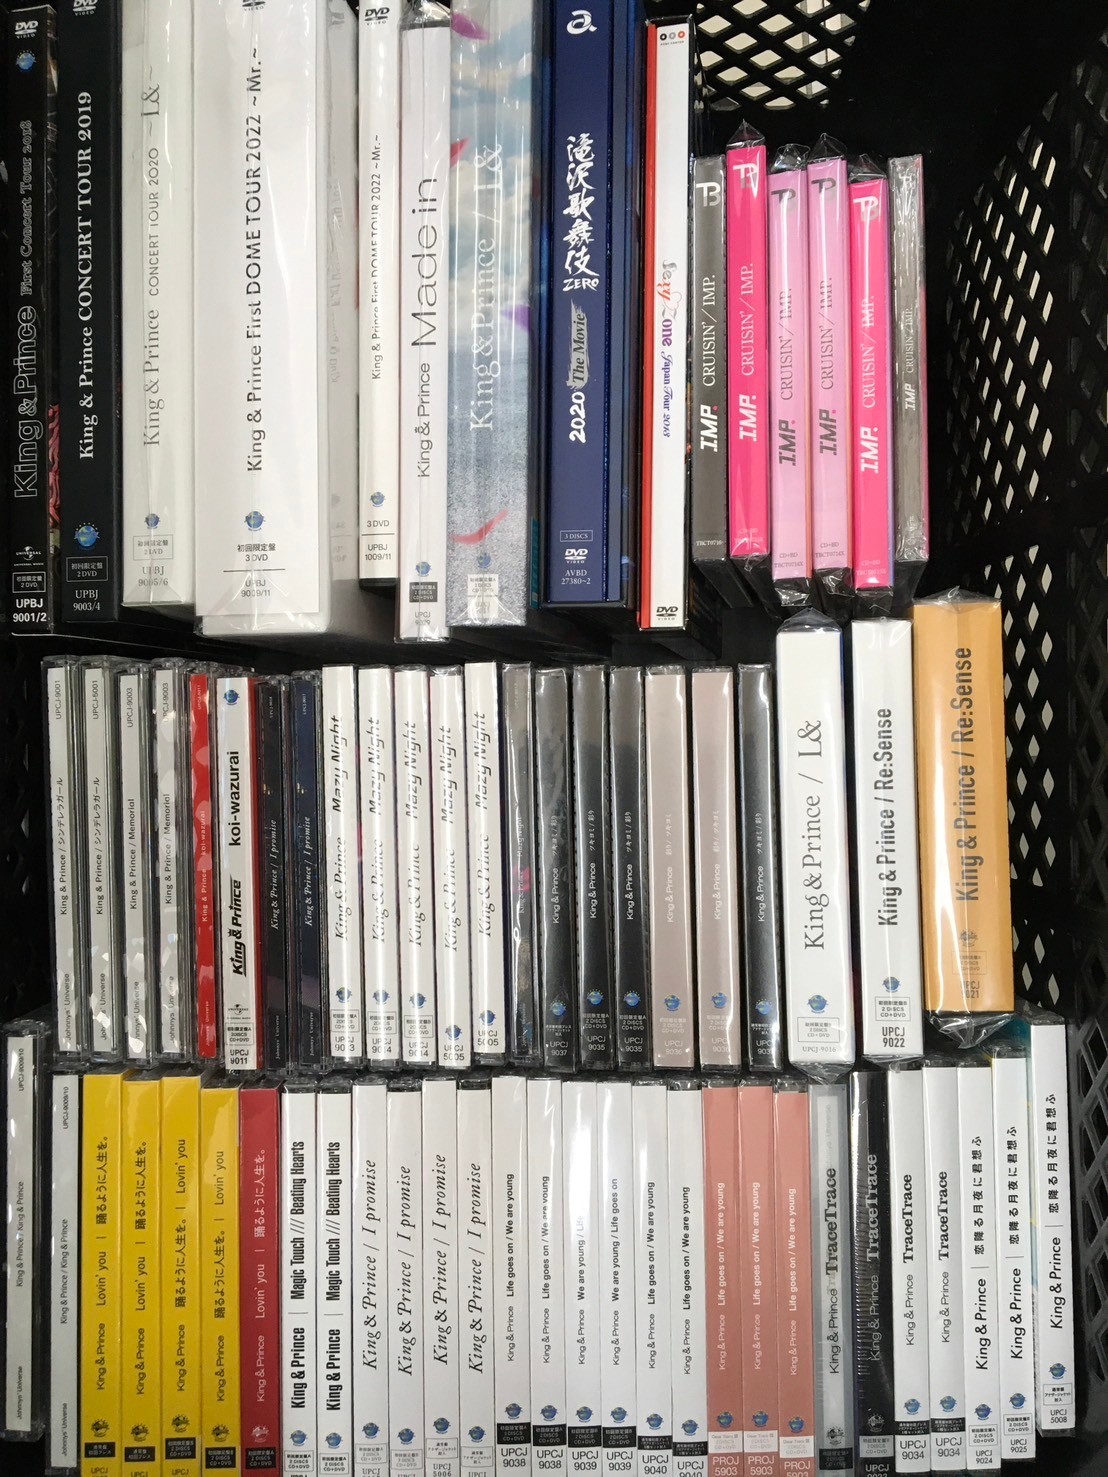 □King & Prince のCD/DVD買取させていただきました！□ - マンガ倉庫 